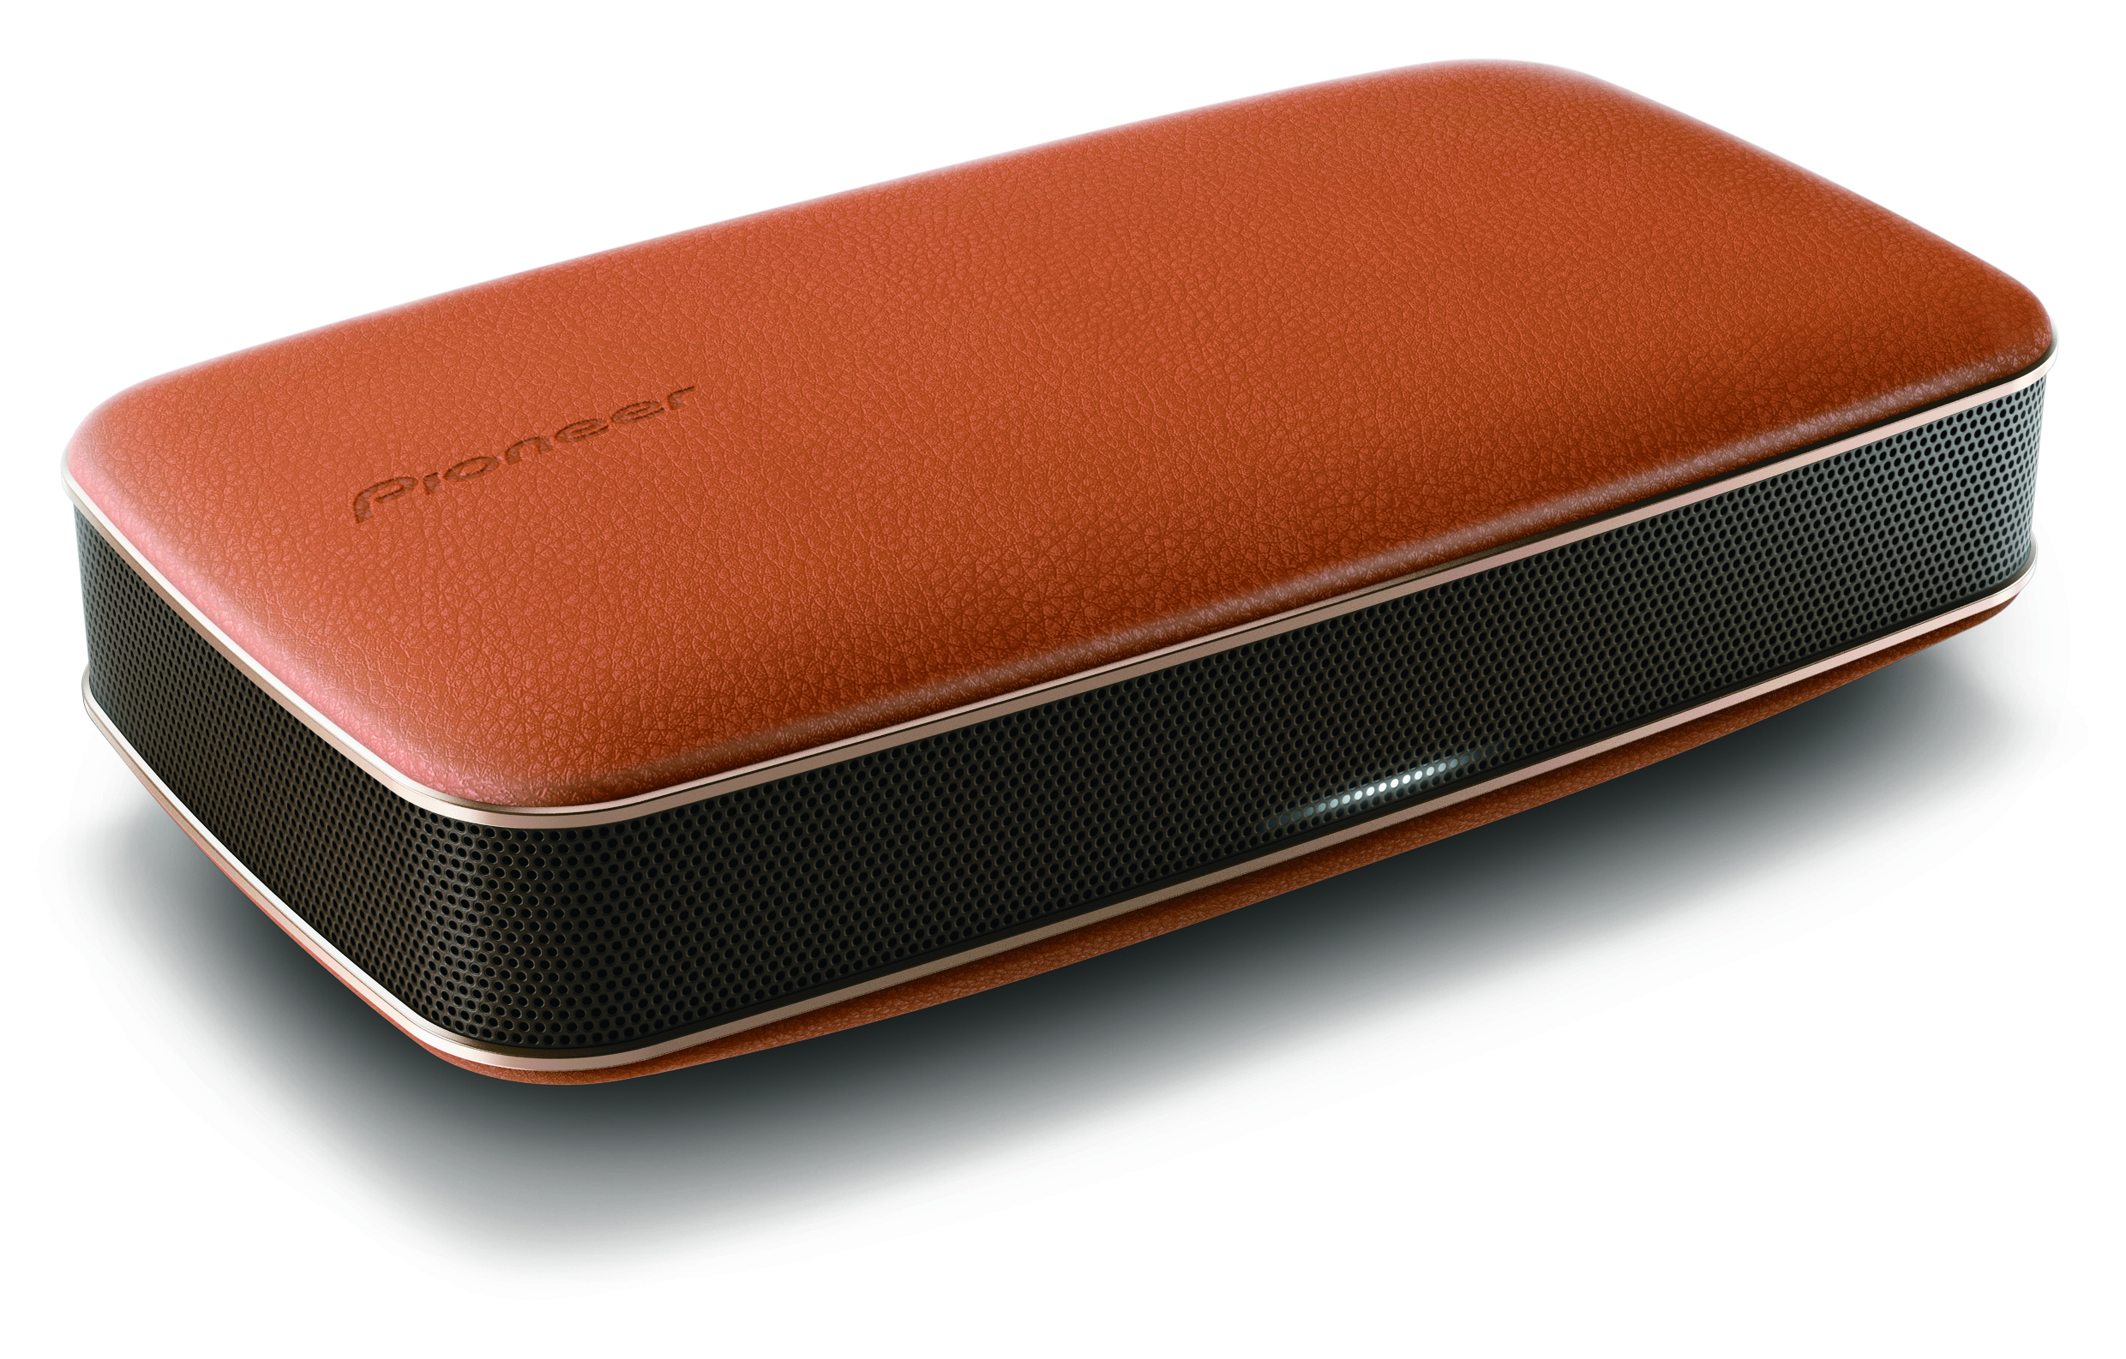 Pioneer’s XW-LF3/LF1 Bluetooth wireless speakers seen here in an elegant leather finish